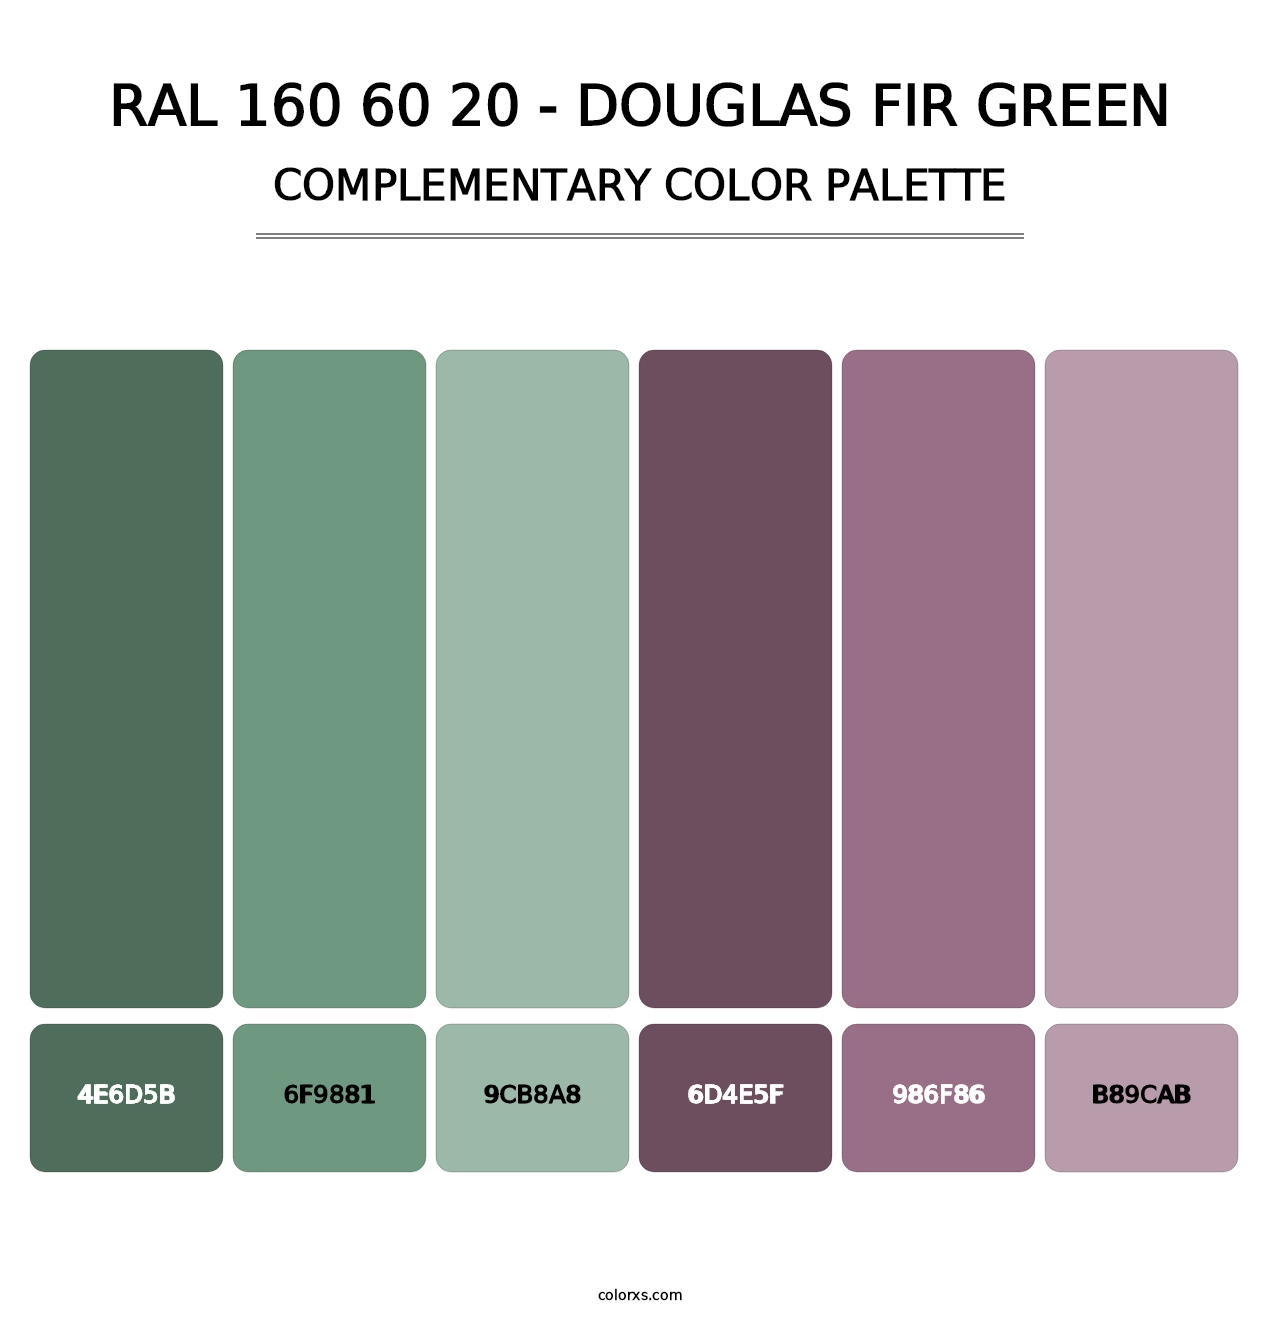 RAL 160 60 20 - Douglas Fir Green - Complementary Color Palette